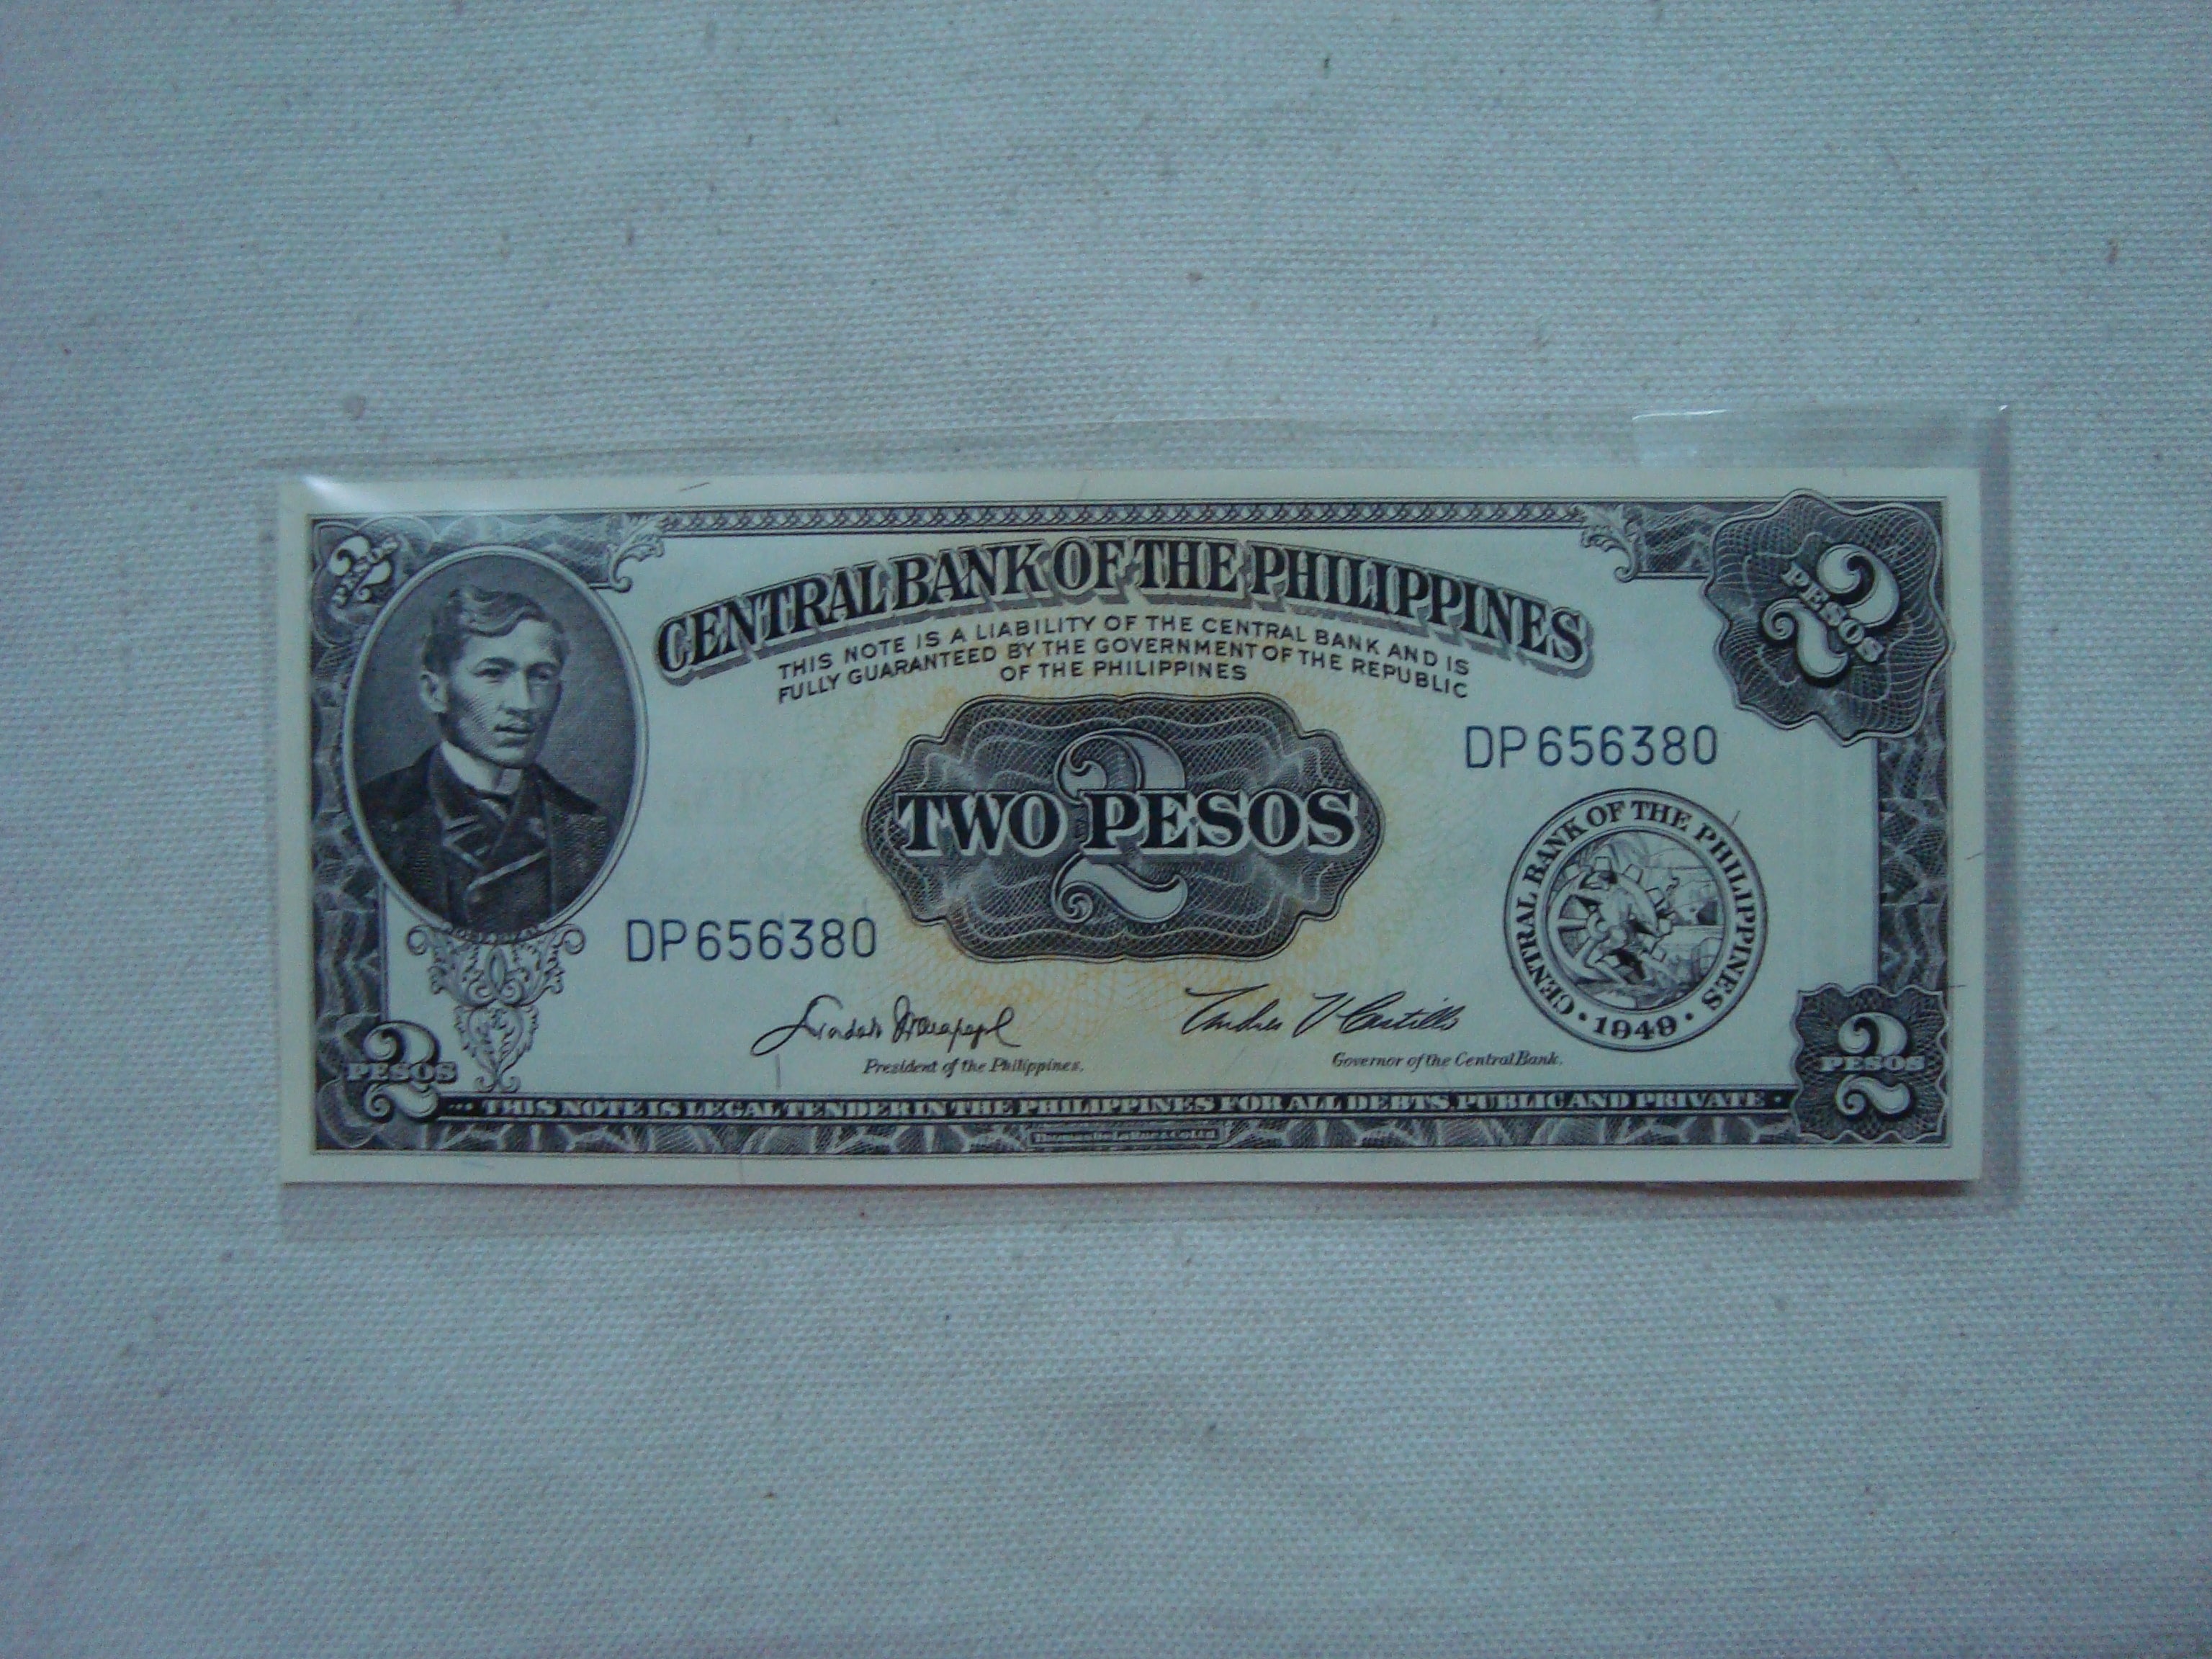 CBP 2 Pesos Paper Money